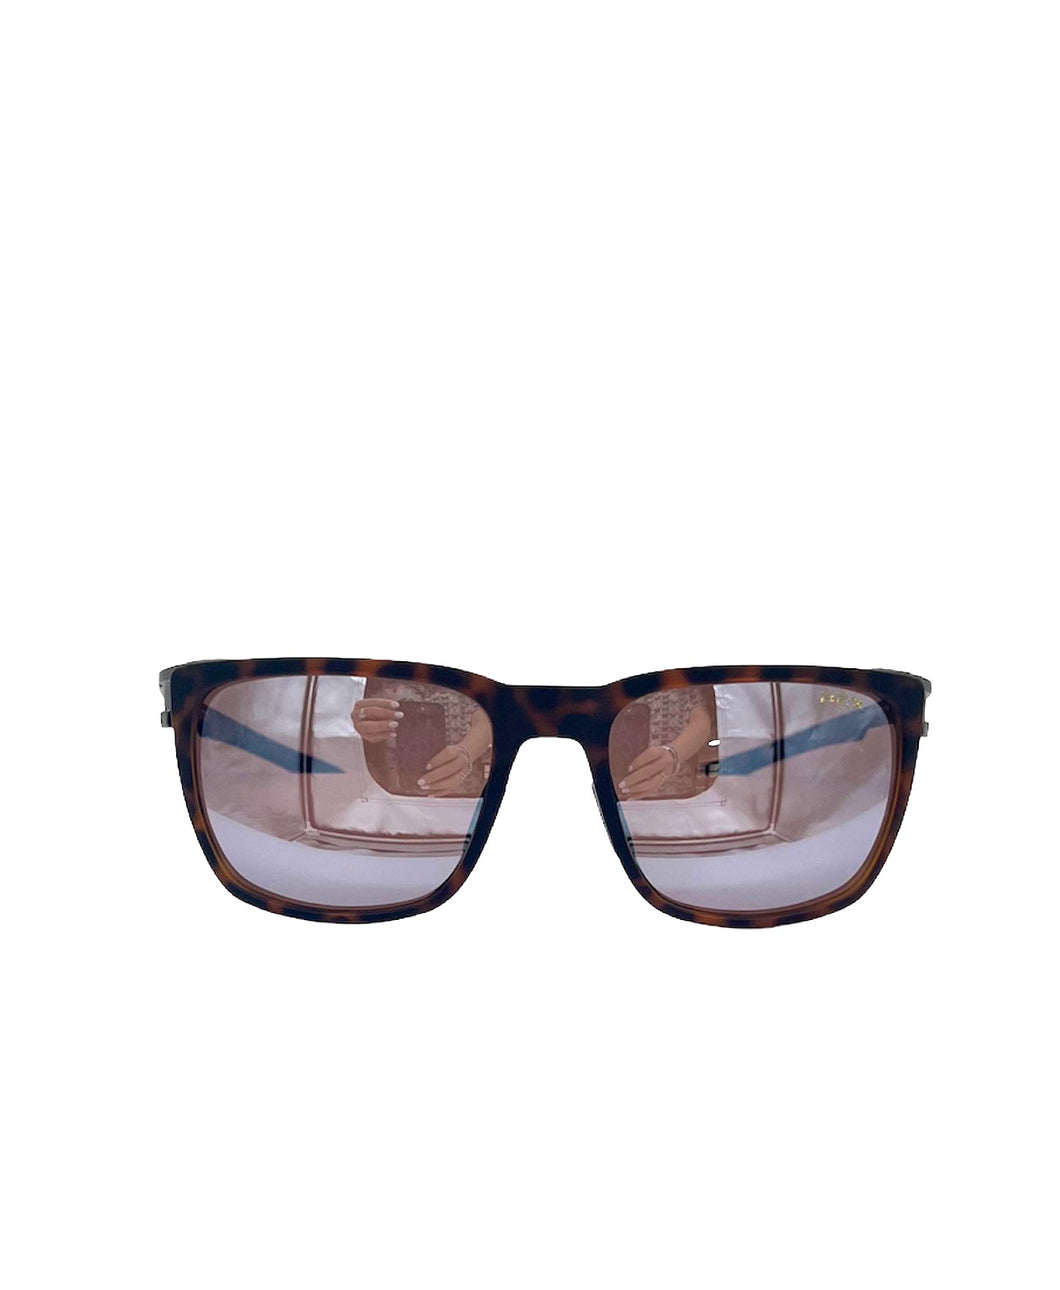 Bex Adams Tortoise/Brown Sunglasses